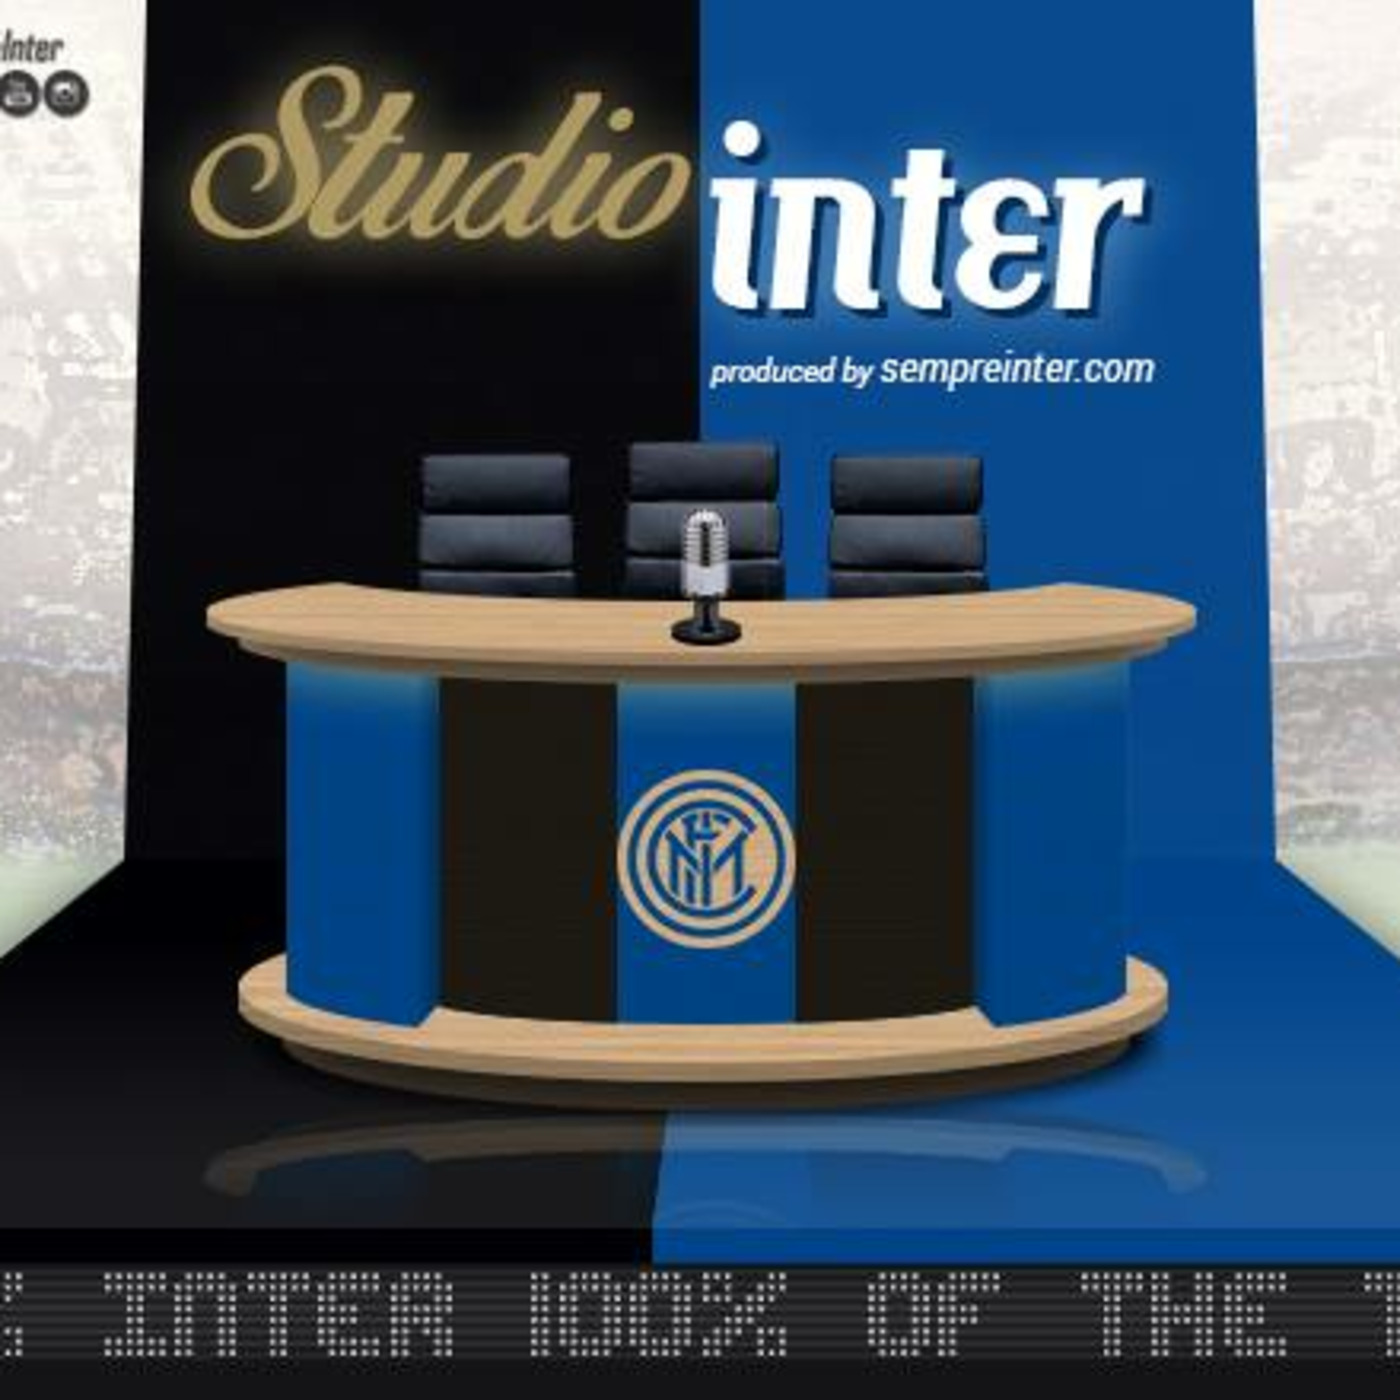 StudioInter XL Ep. 78 Derby Special: ”Will Icardi finally score vs AC Milan?”